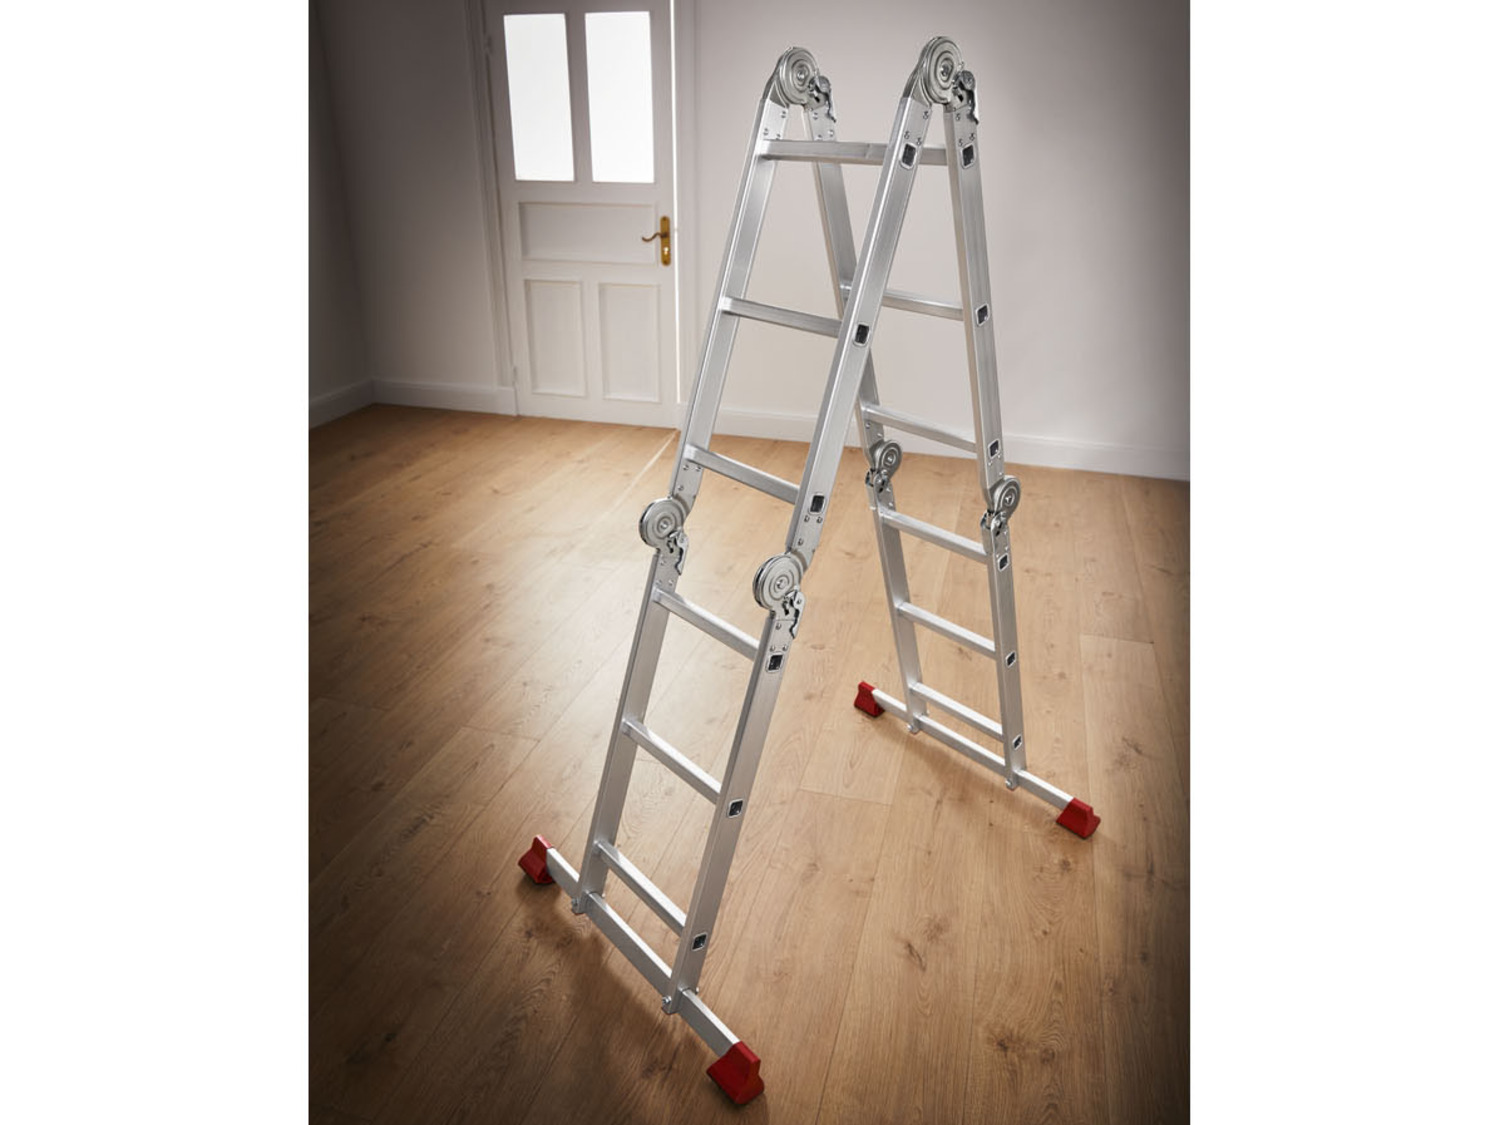 Multifunctionele ladder | Lidl.be